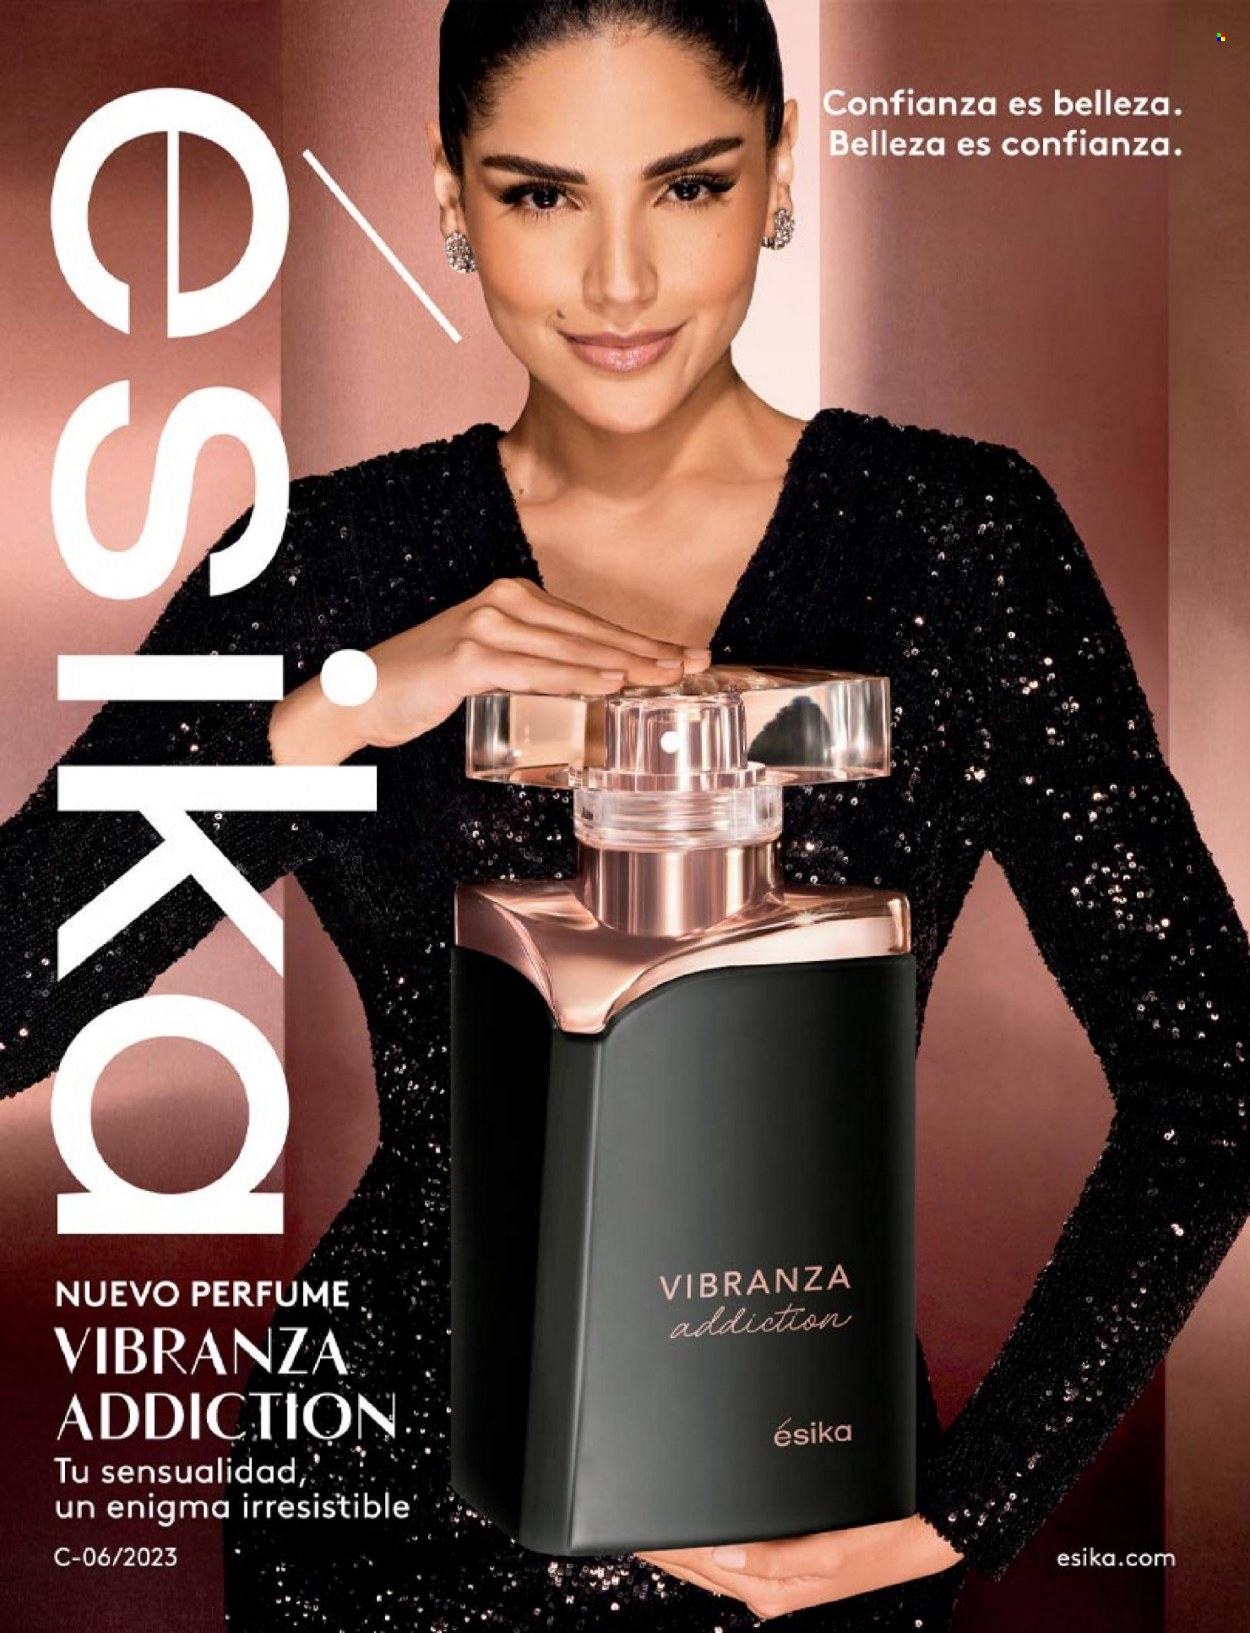 Catálogo Ésika - Ventas - perfume. Página 1.